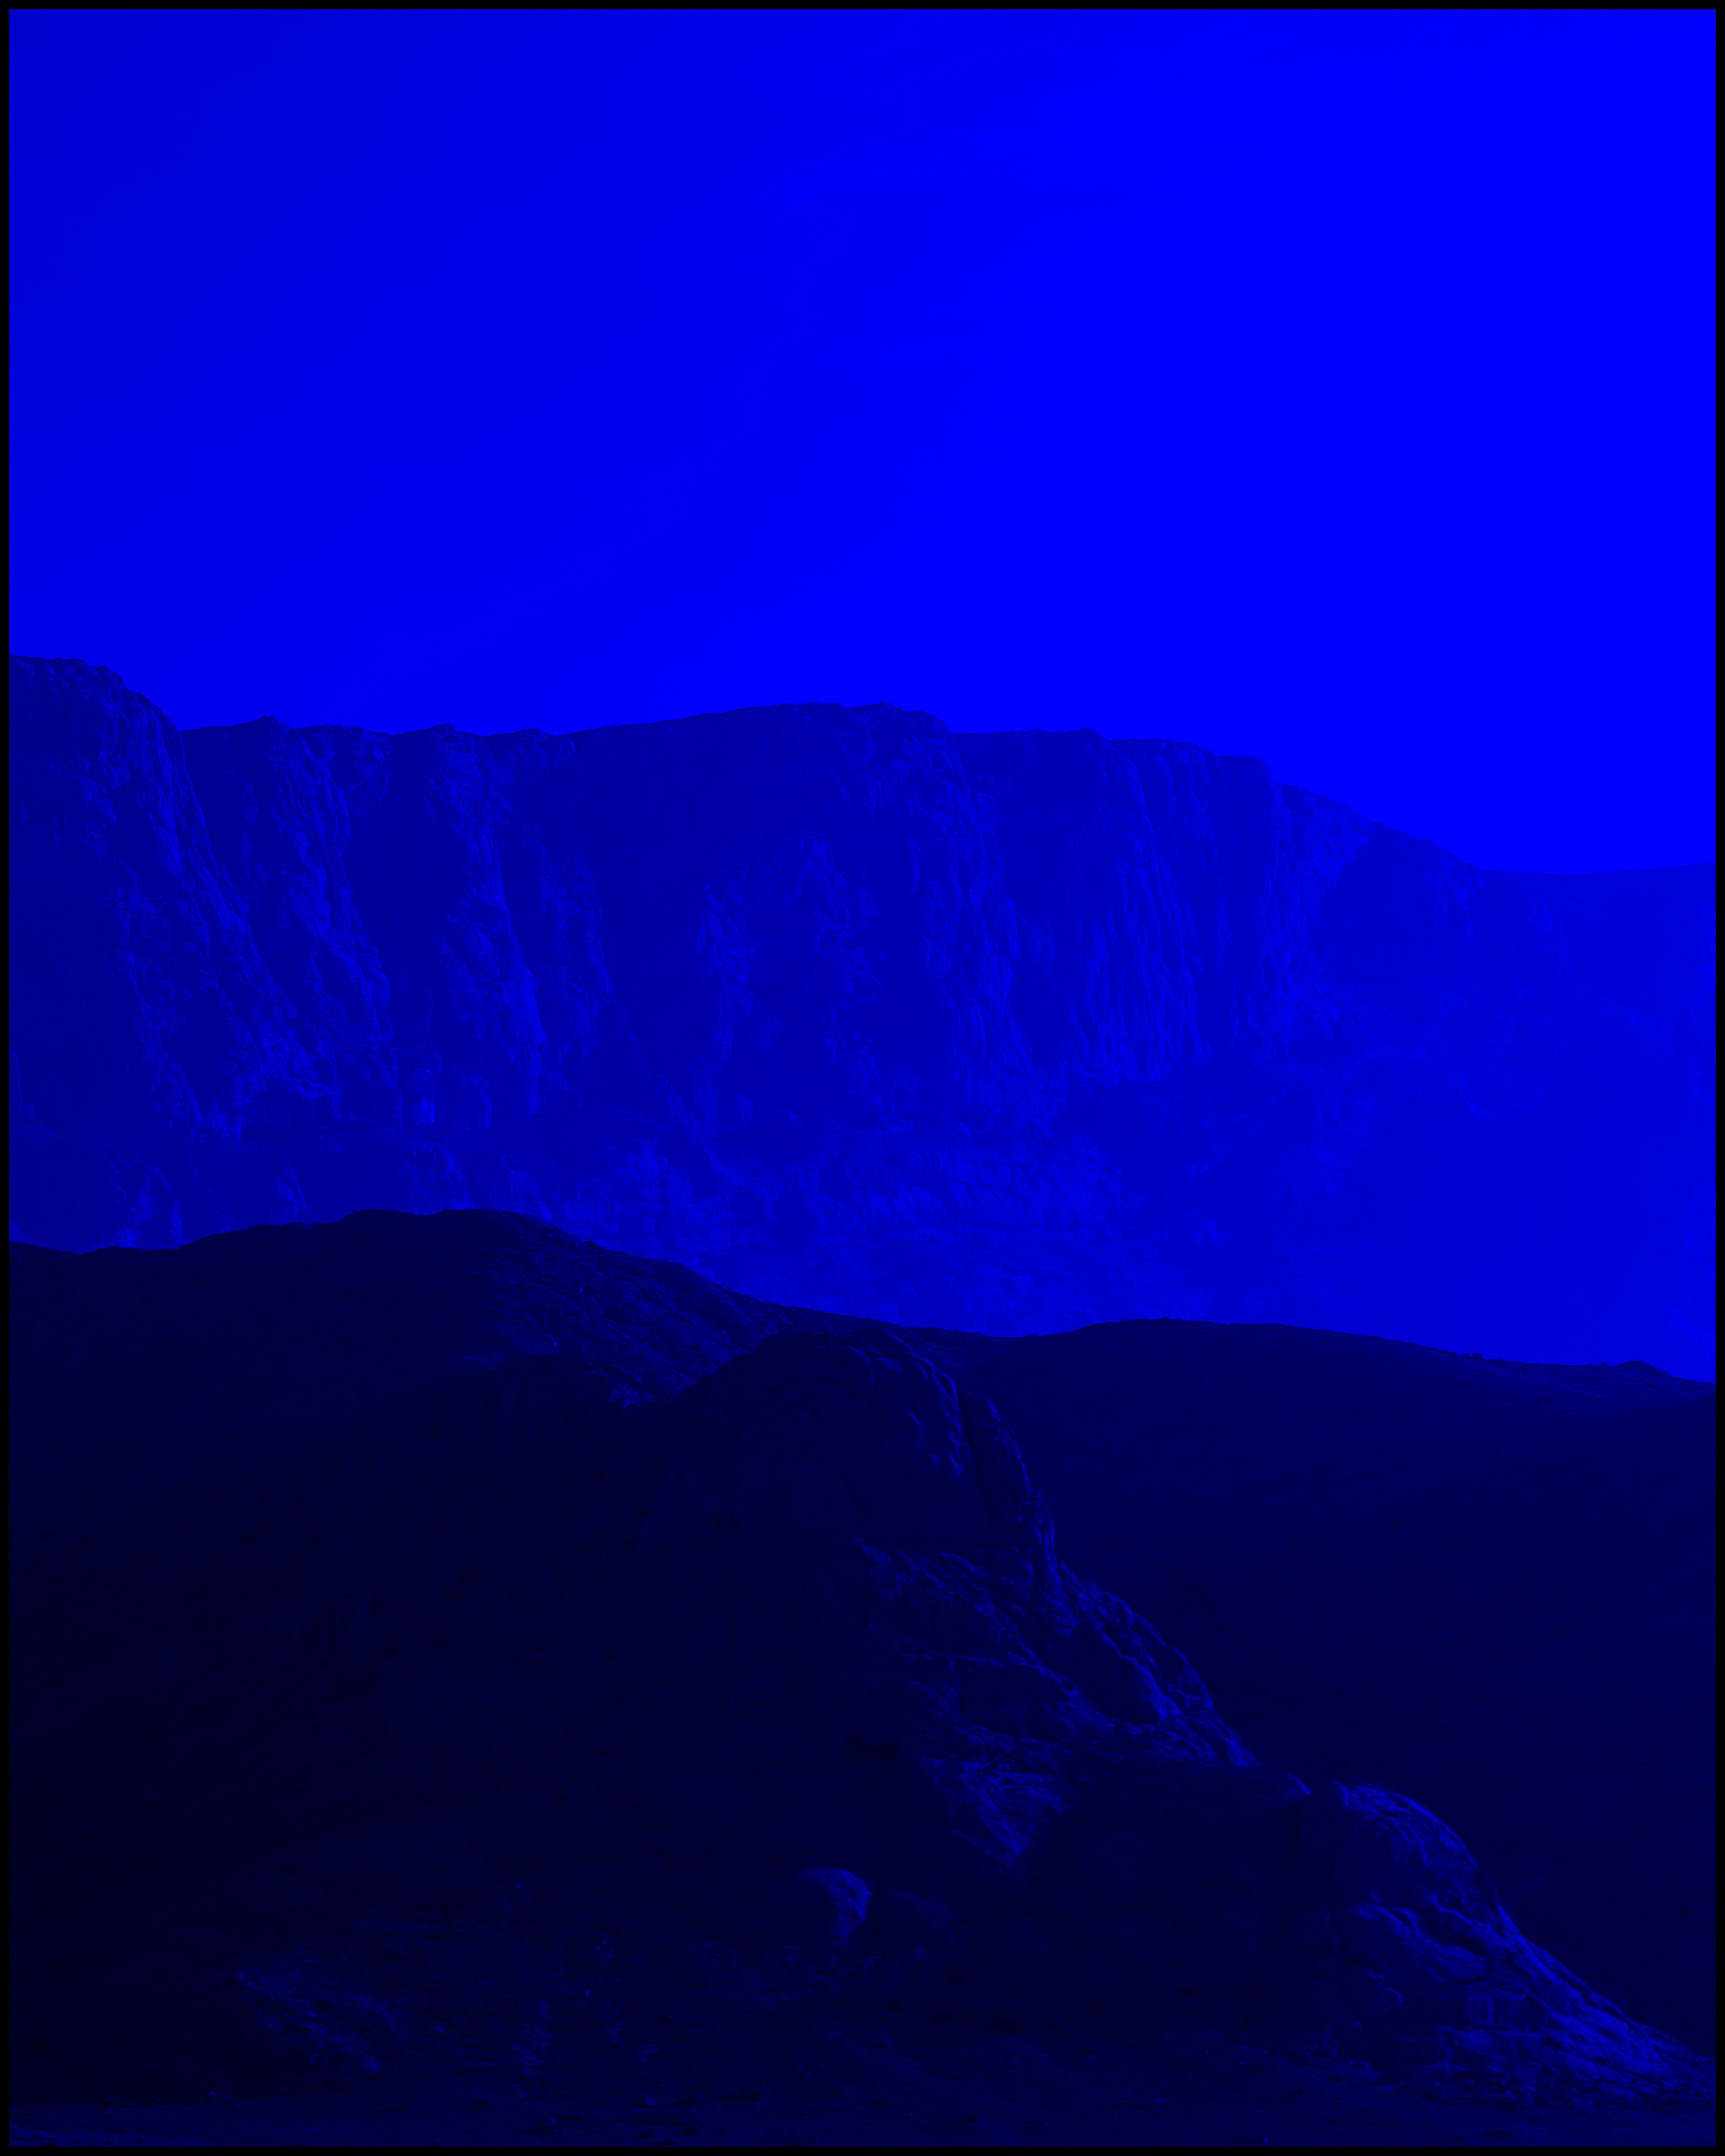 Ultramarine hills - monocolor blue photography of desert dunes